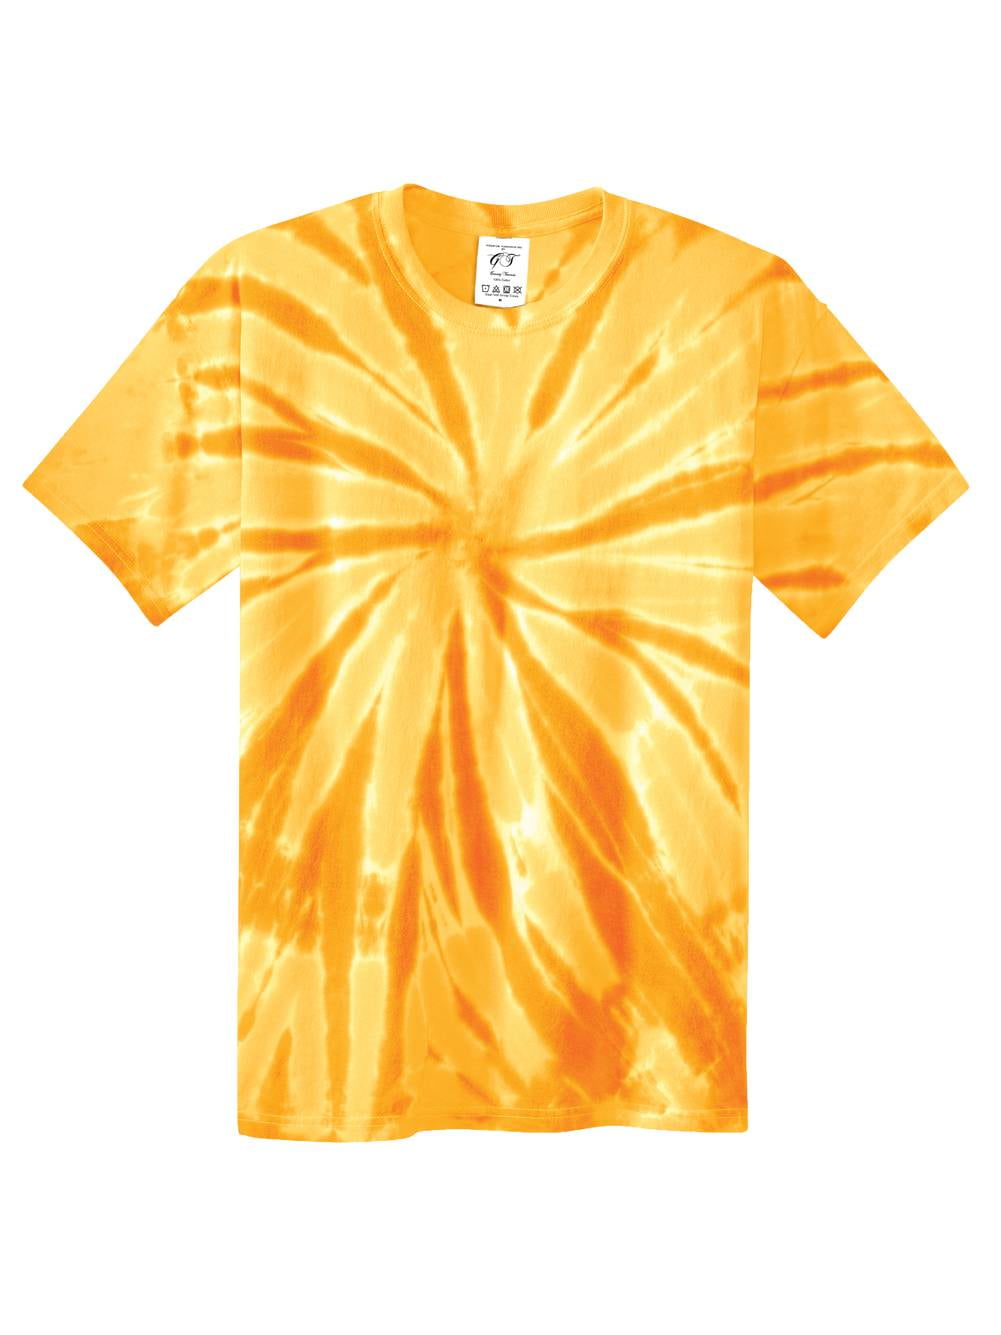 Gildan adult size X-large yellow, orange, and fuchsia ice dyed fan fold tie  dye sunburst shirt — Fun Endeavors Tie Dye Lab